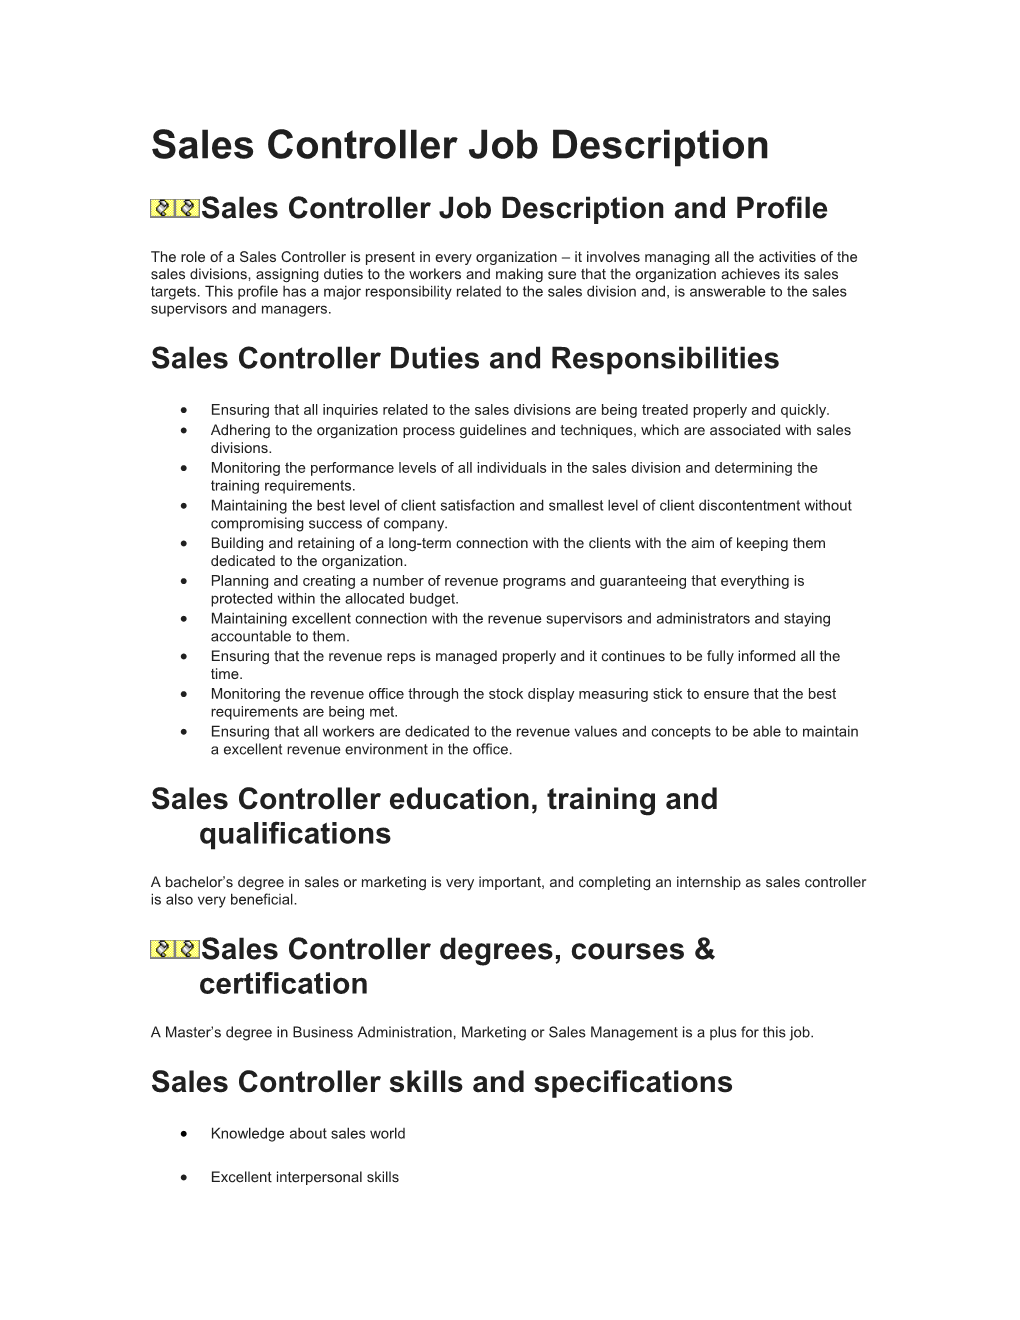 Sales Controller Job Description